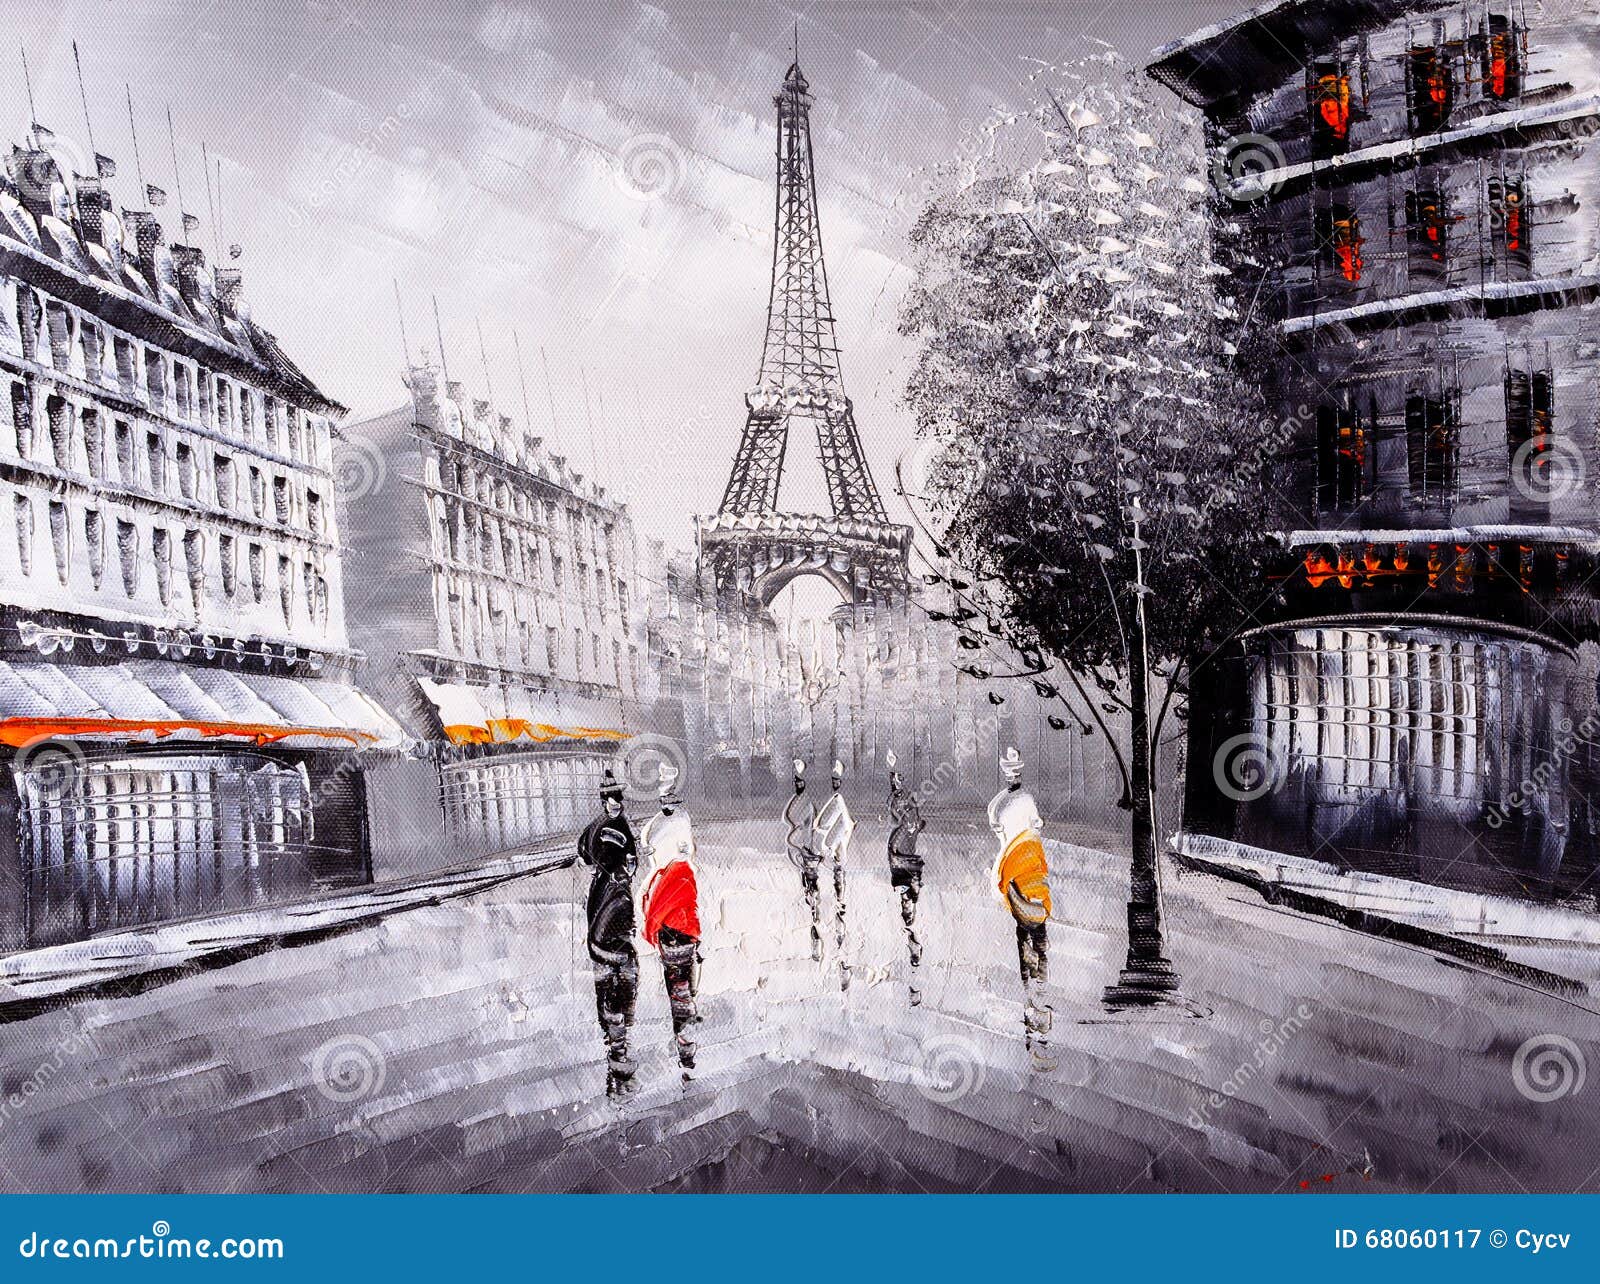 oil painting - street view of paris